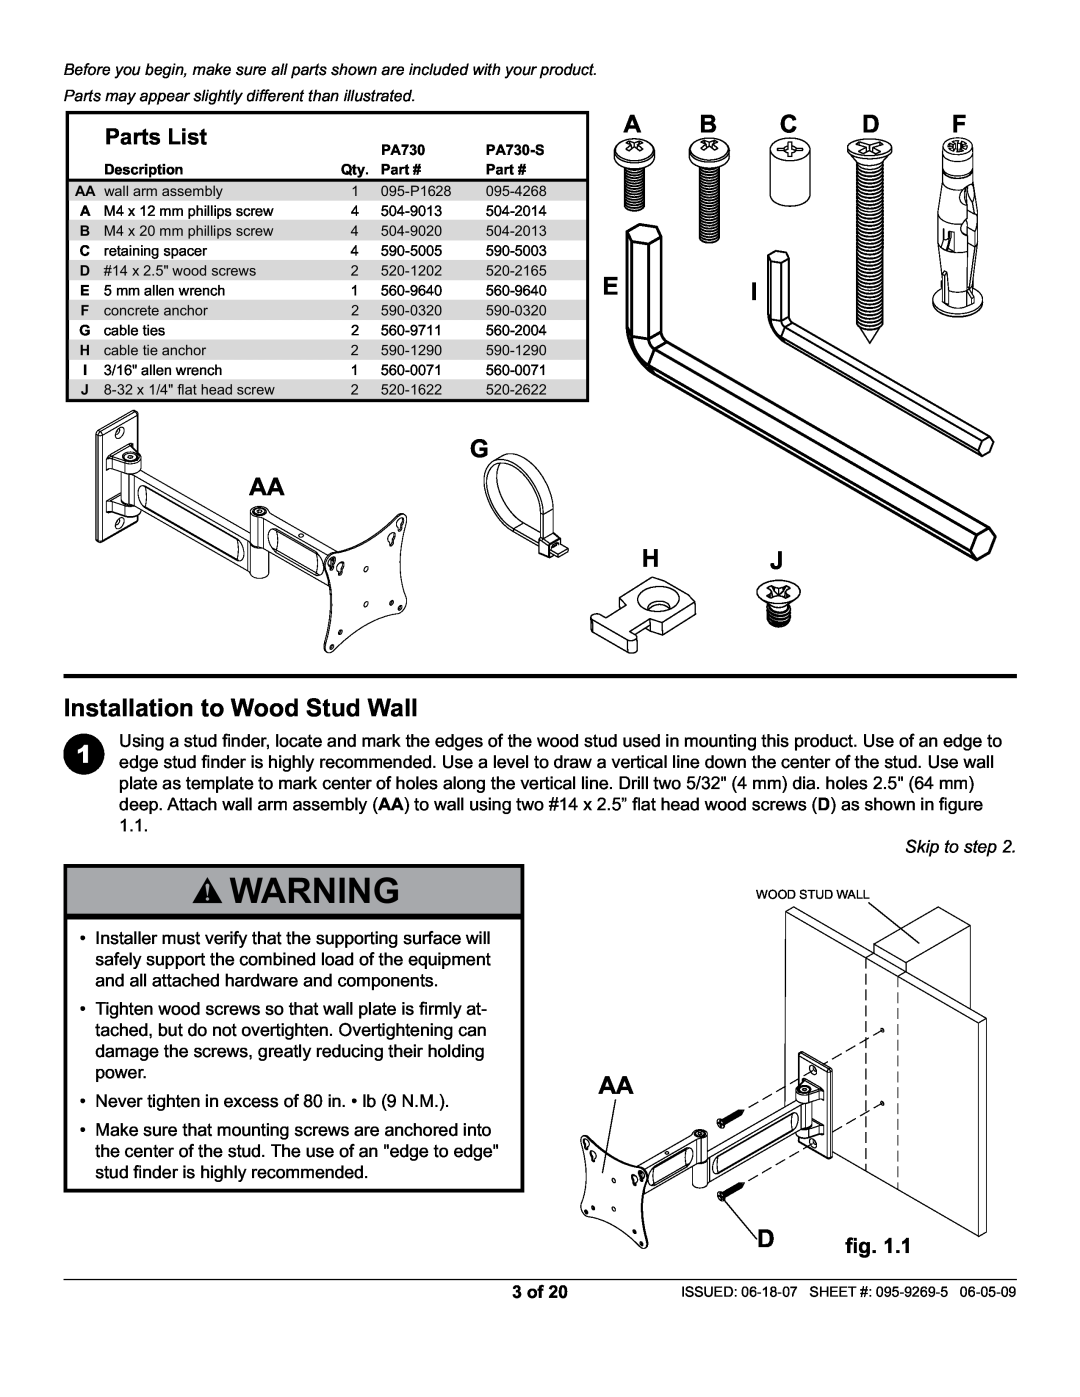 Peerless Industries PA730-S manual G AA H Installation to Wood Stud Wall, B C D F I J, Parts List, Skip to step, 3 of 